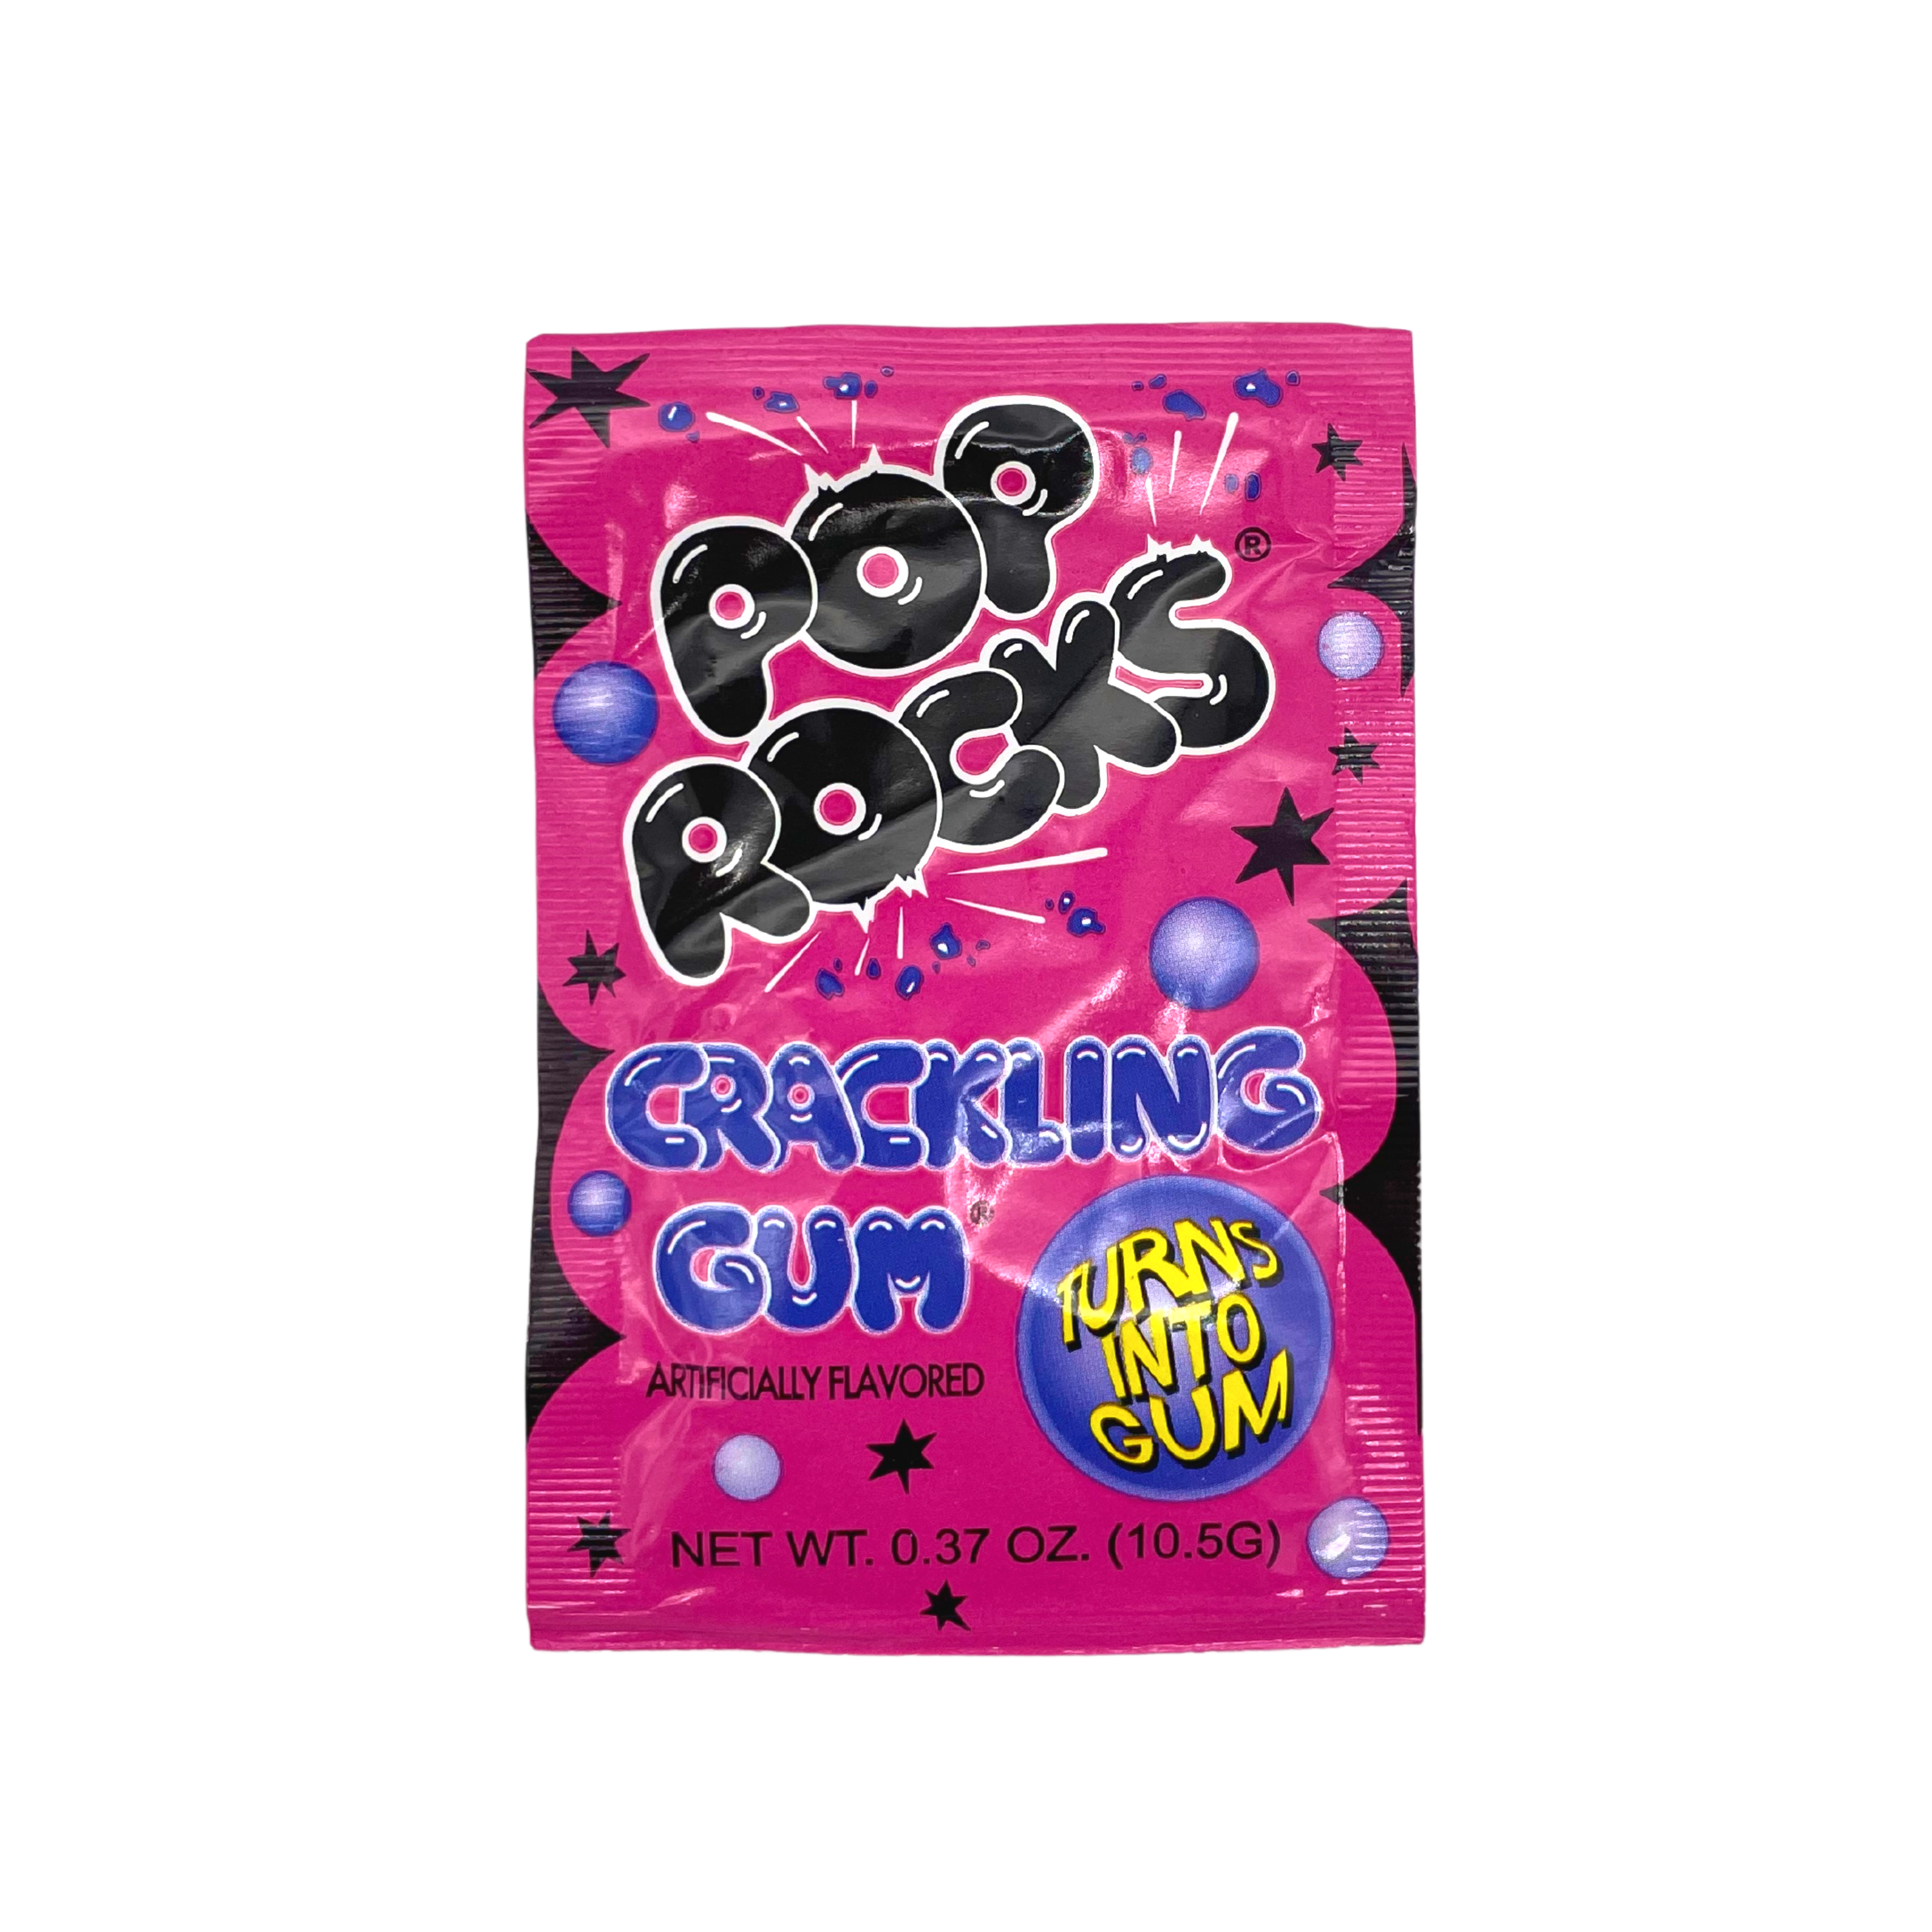 Pop Rocks Crackling gum 10,5g